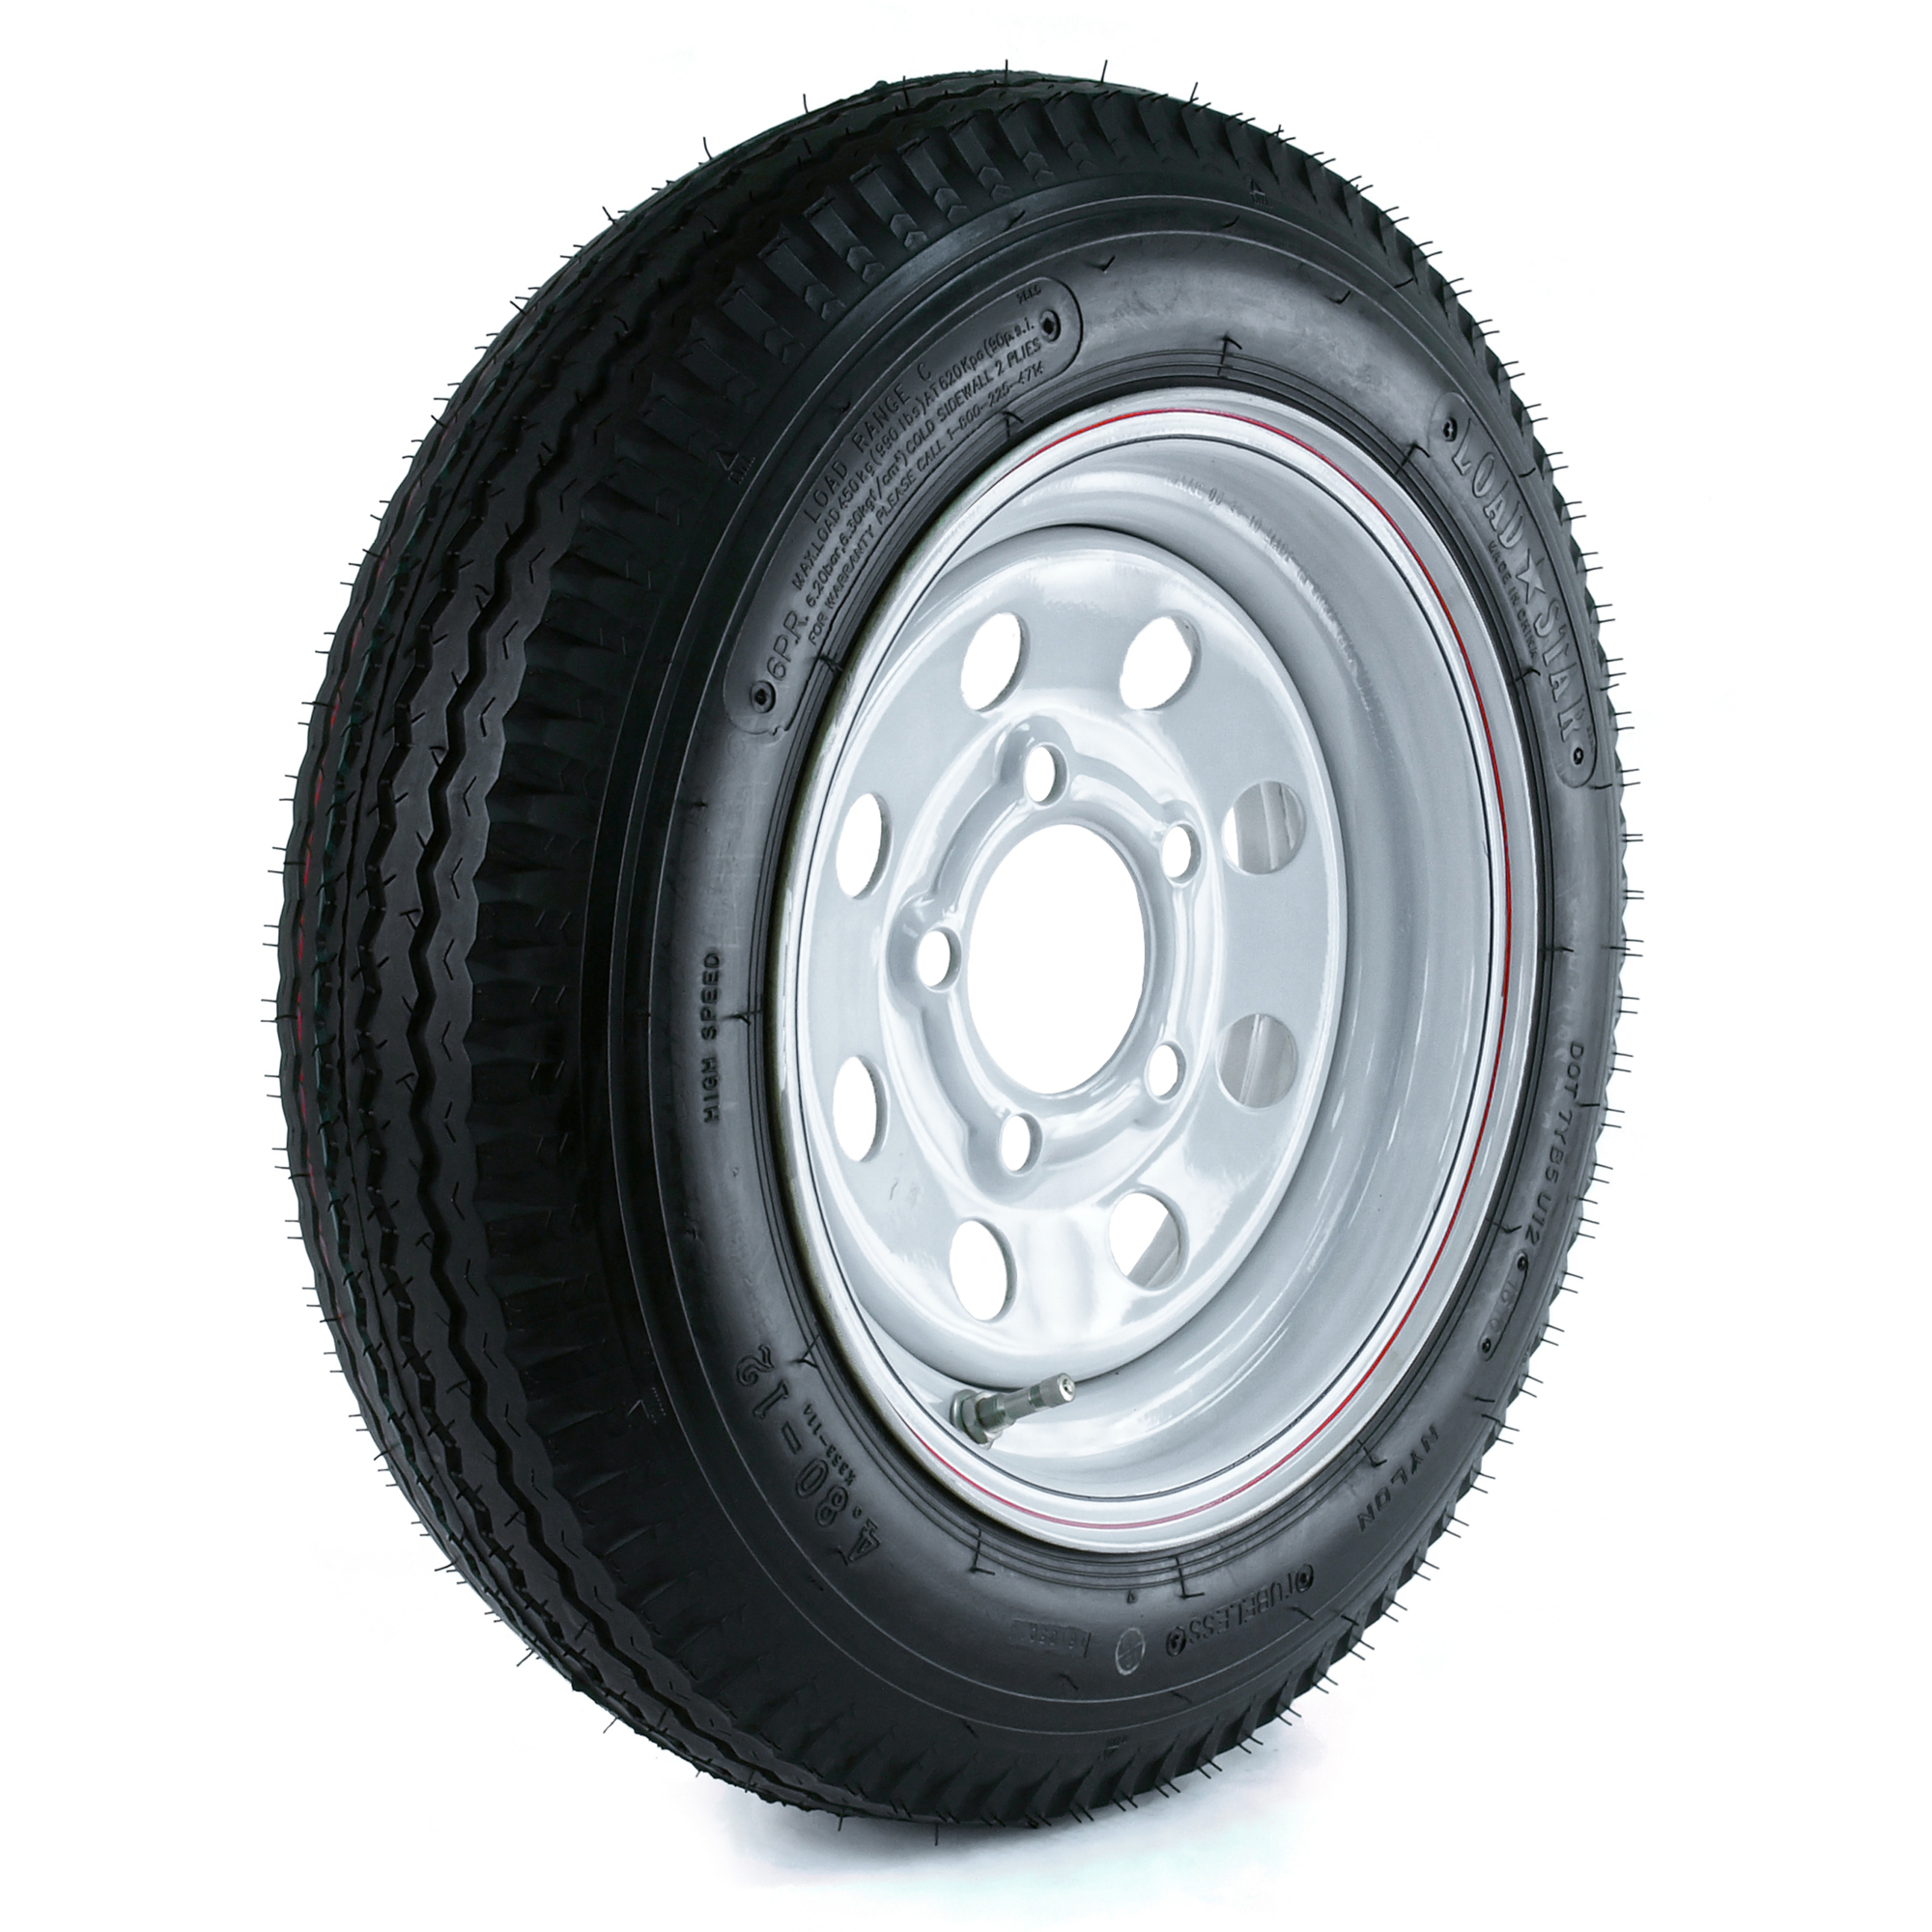 Kenda Loadstar 12Inch Bias-Ply Trailer Tire and Wheel Assembly â 20.5 x 4.80 x 12, 5-Hole, Load Range C, Model DM412C-5MMIN